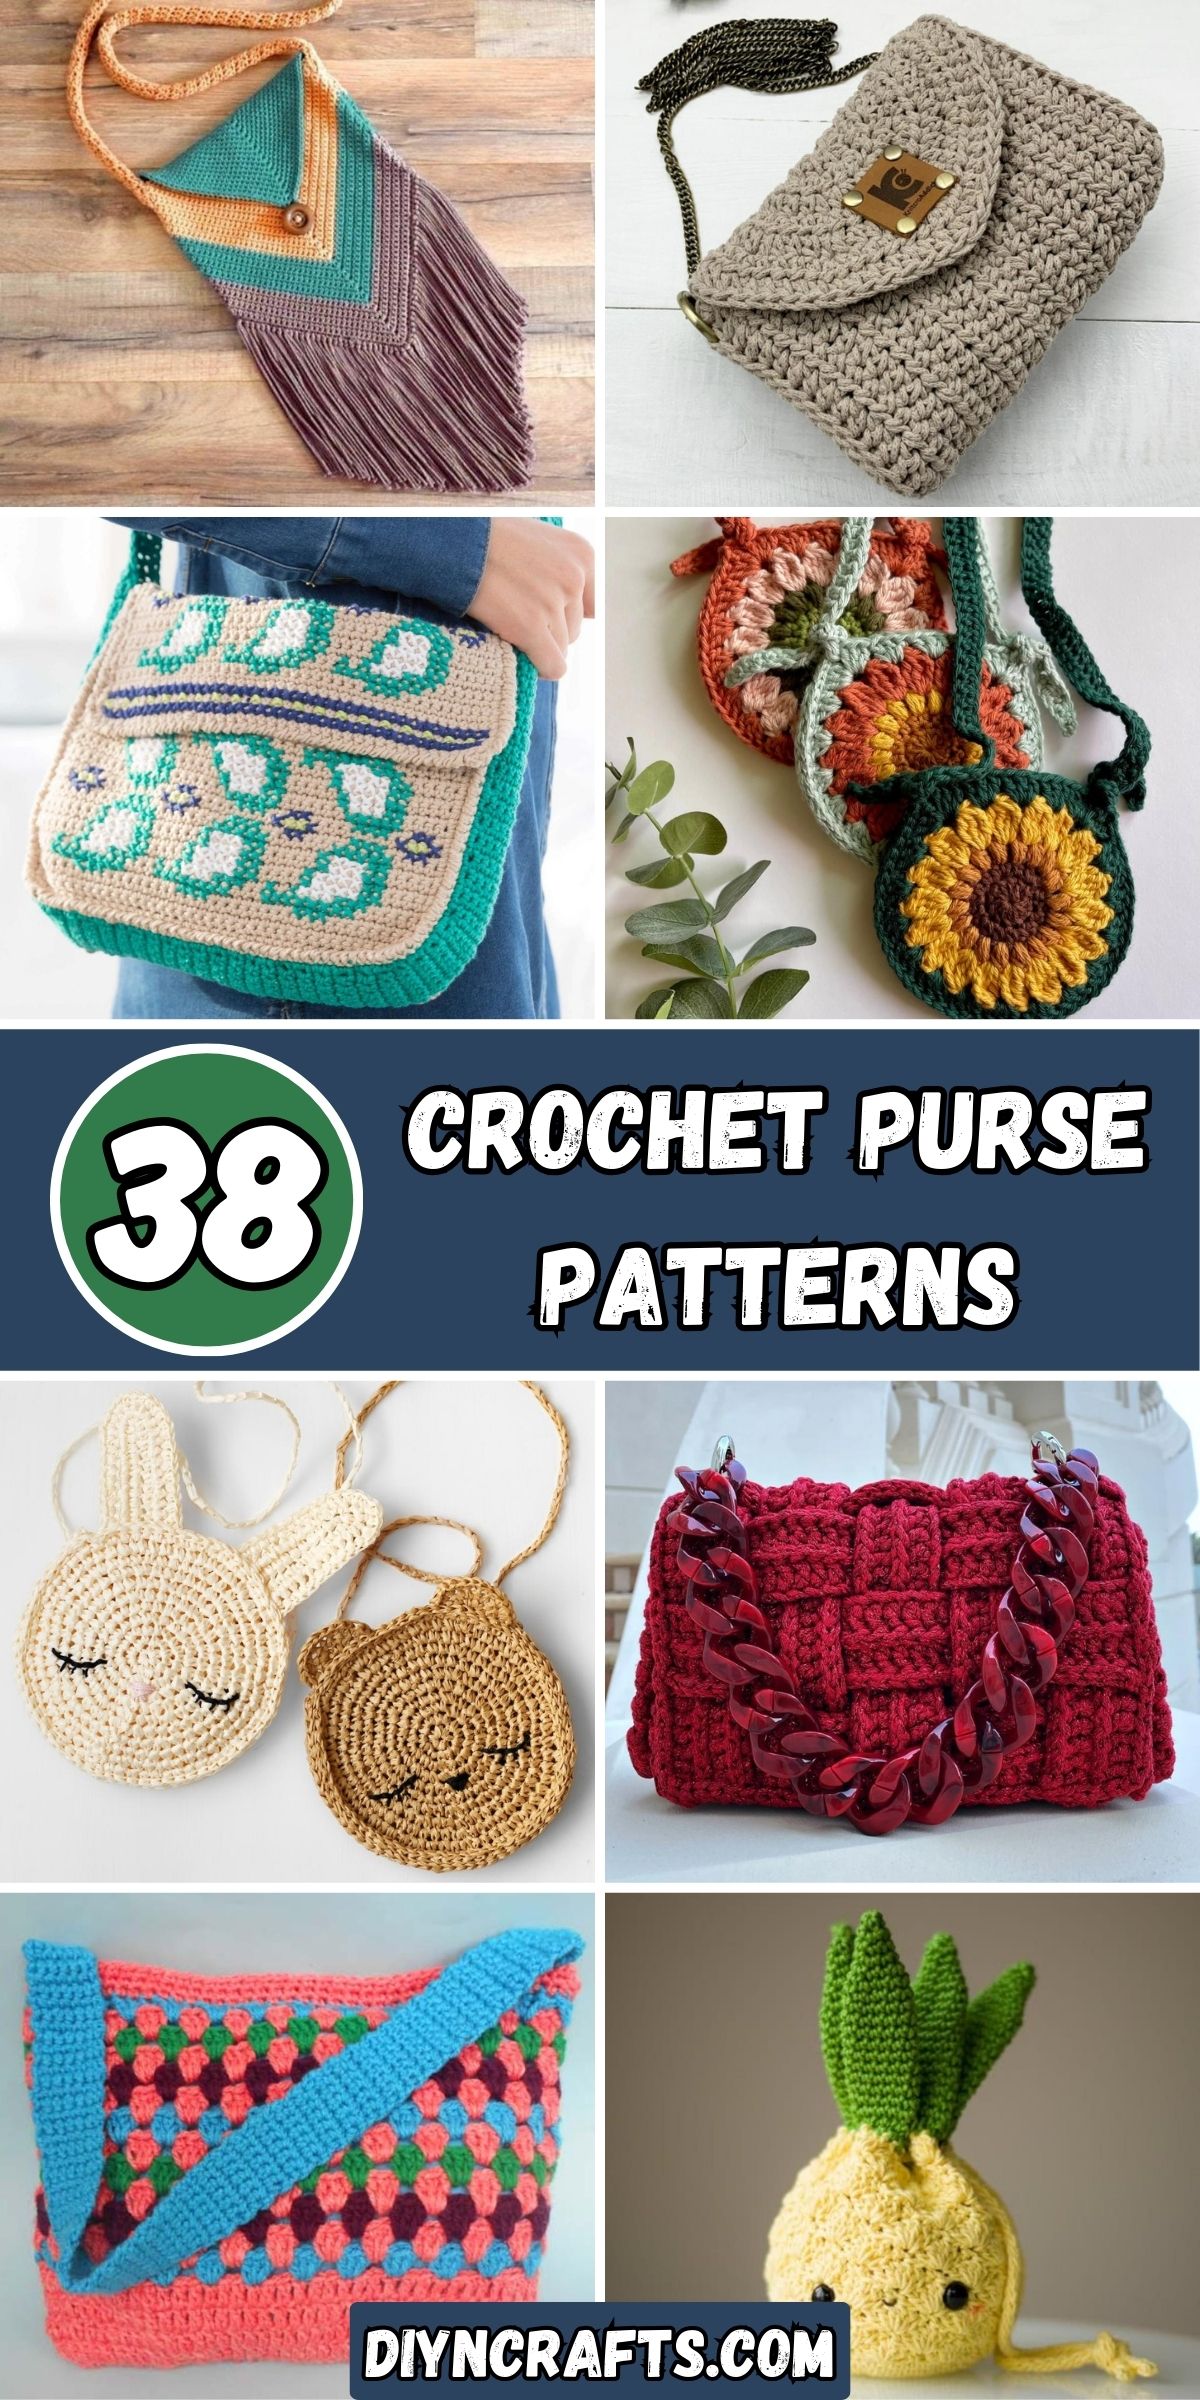 38 Crochet Purse Patterns Collage.